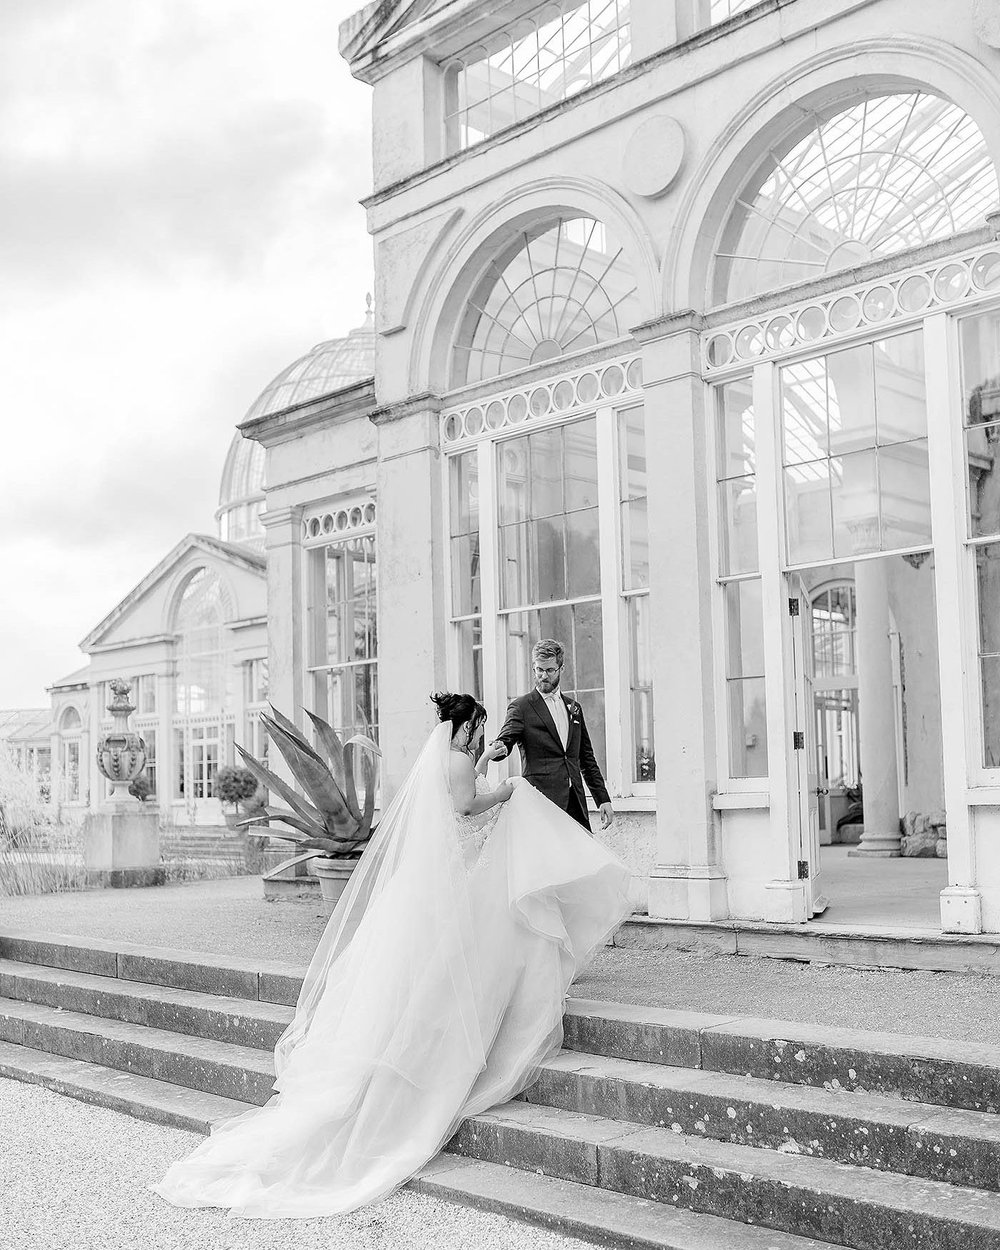 Syon-House-Wedding-Photography-bw copy.jpg